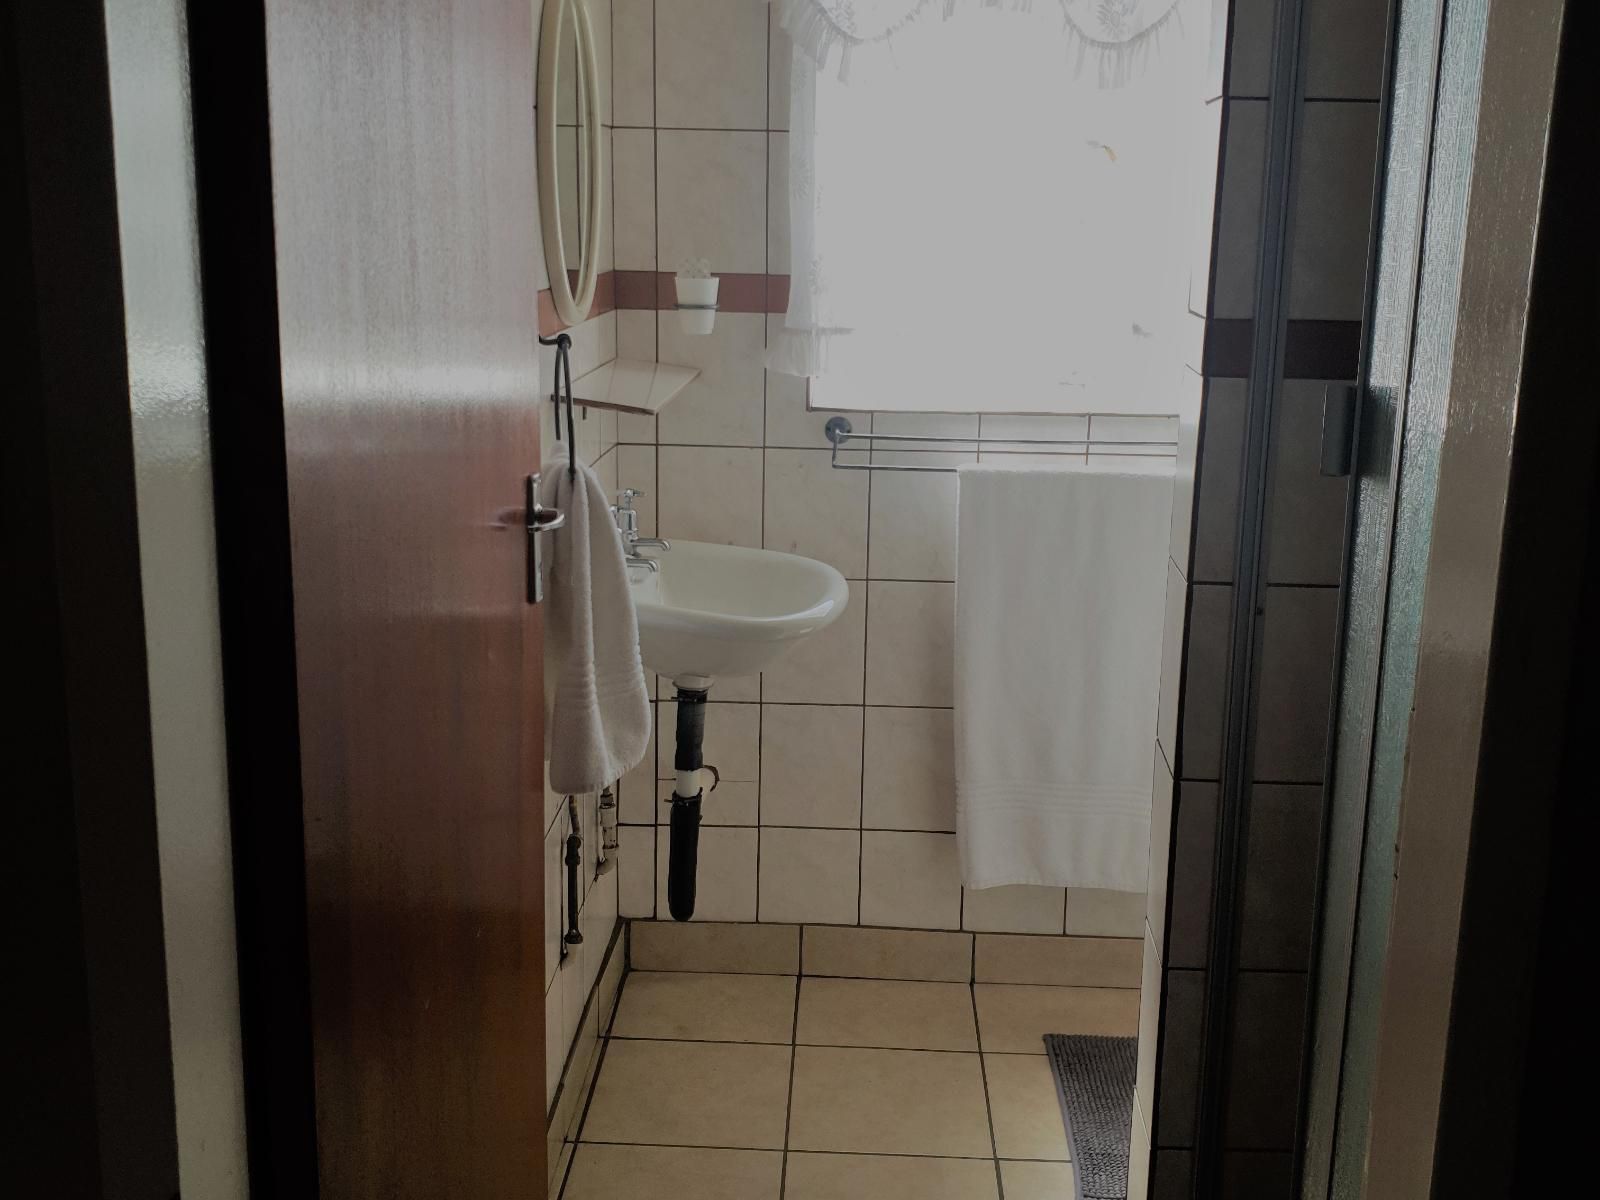 Executive Lodge Oranjesig Bloemfontein Free State South Africa Bathroom